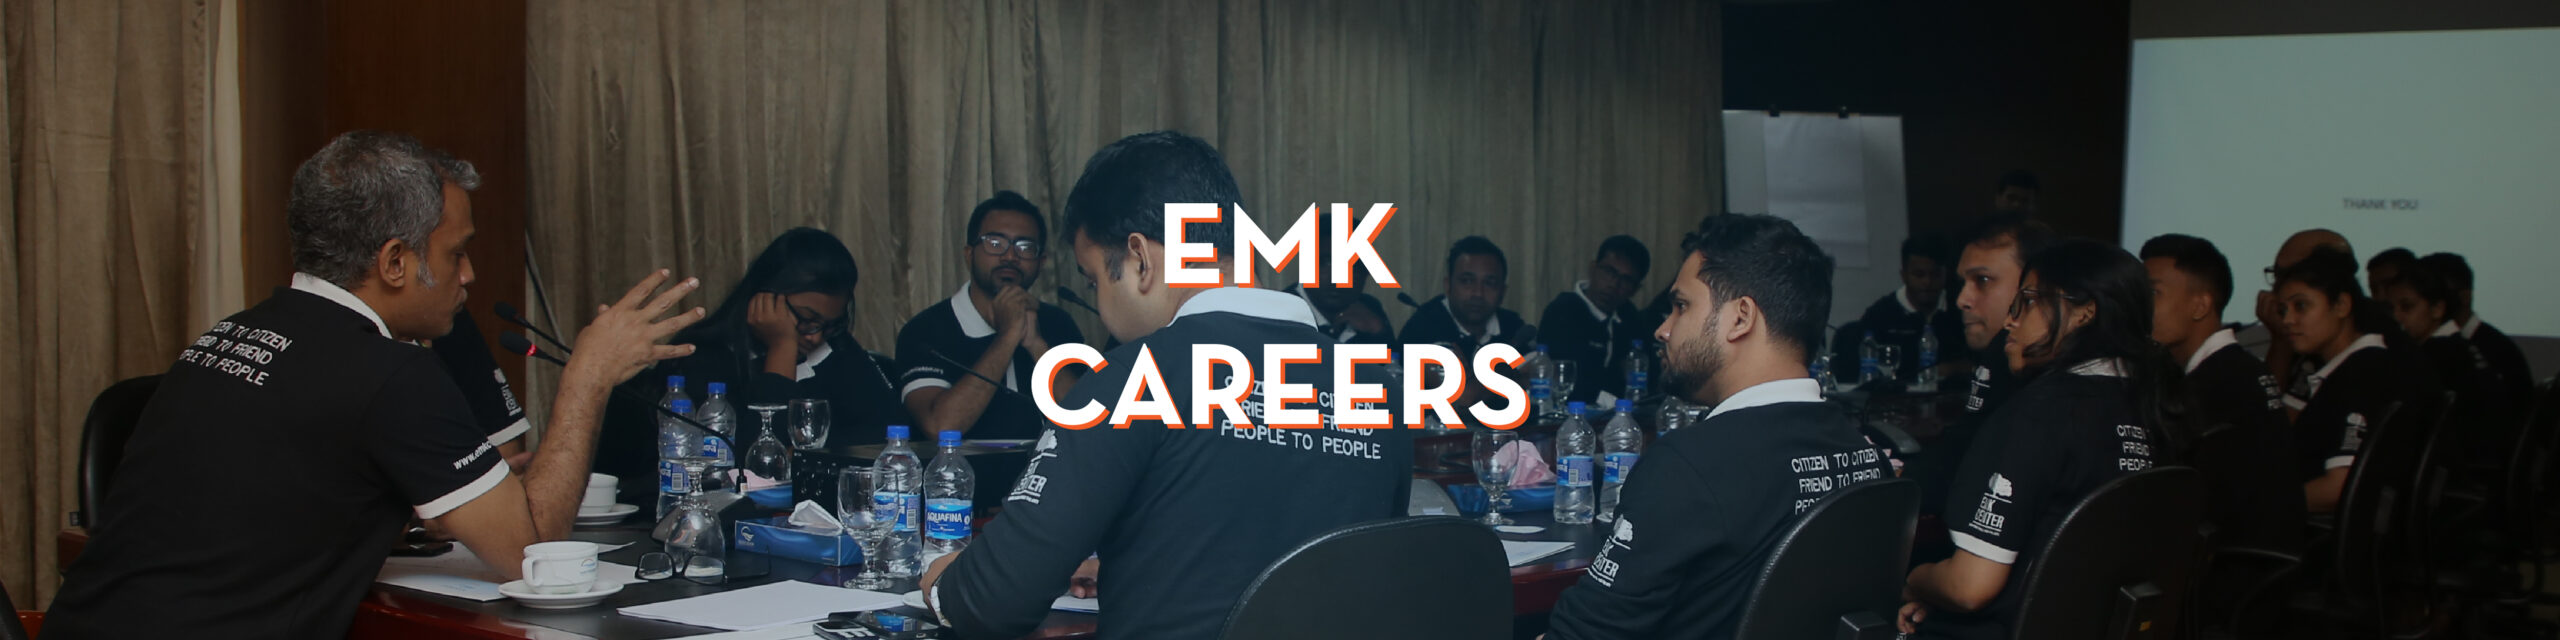 EMK Careers